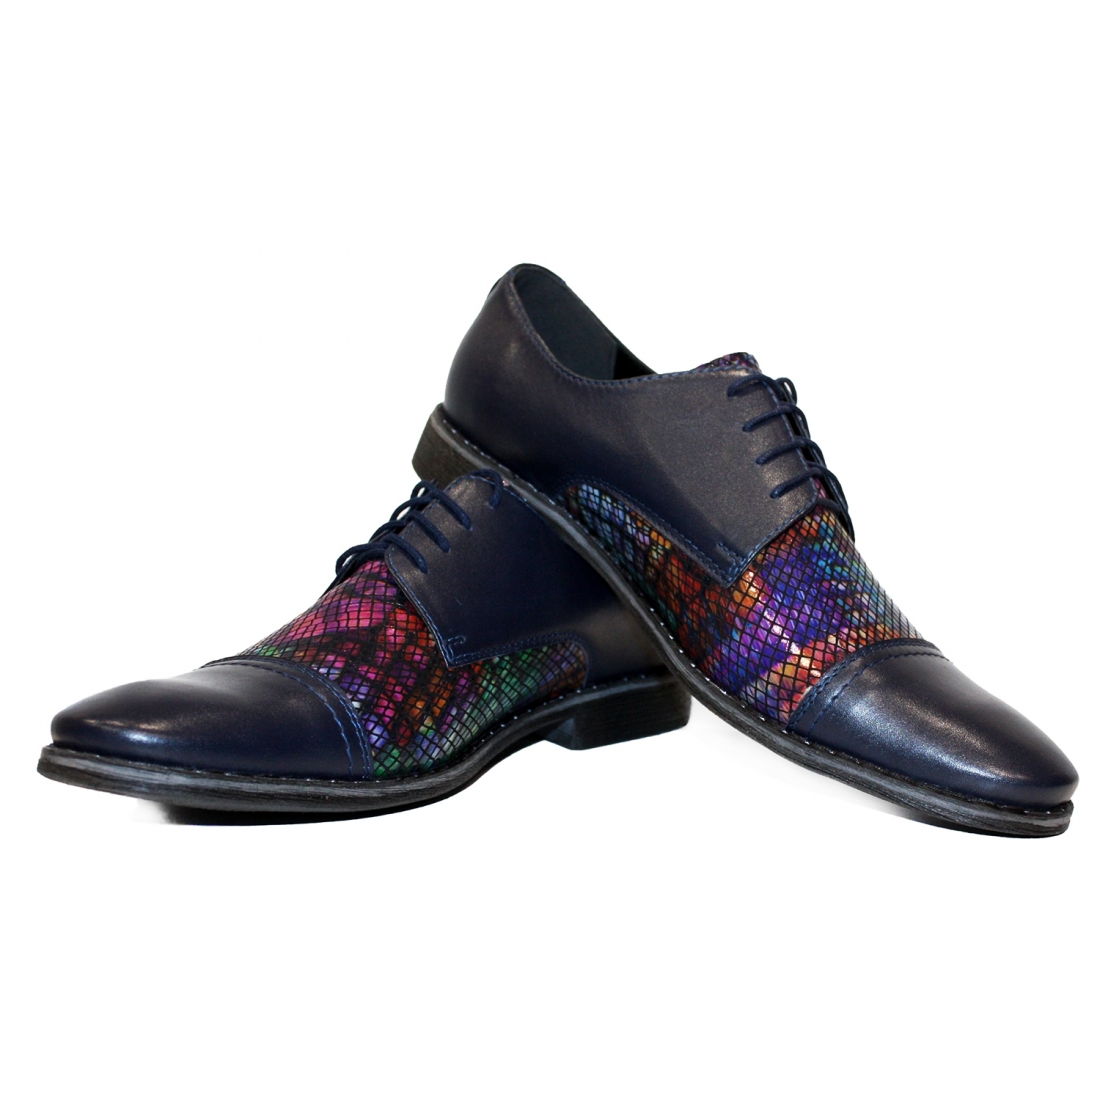 Modello Cubello - Classic Shoes - Handmade Colorful Italian Leather Shoes